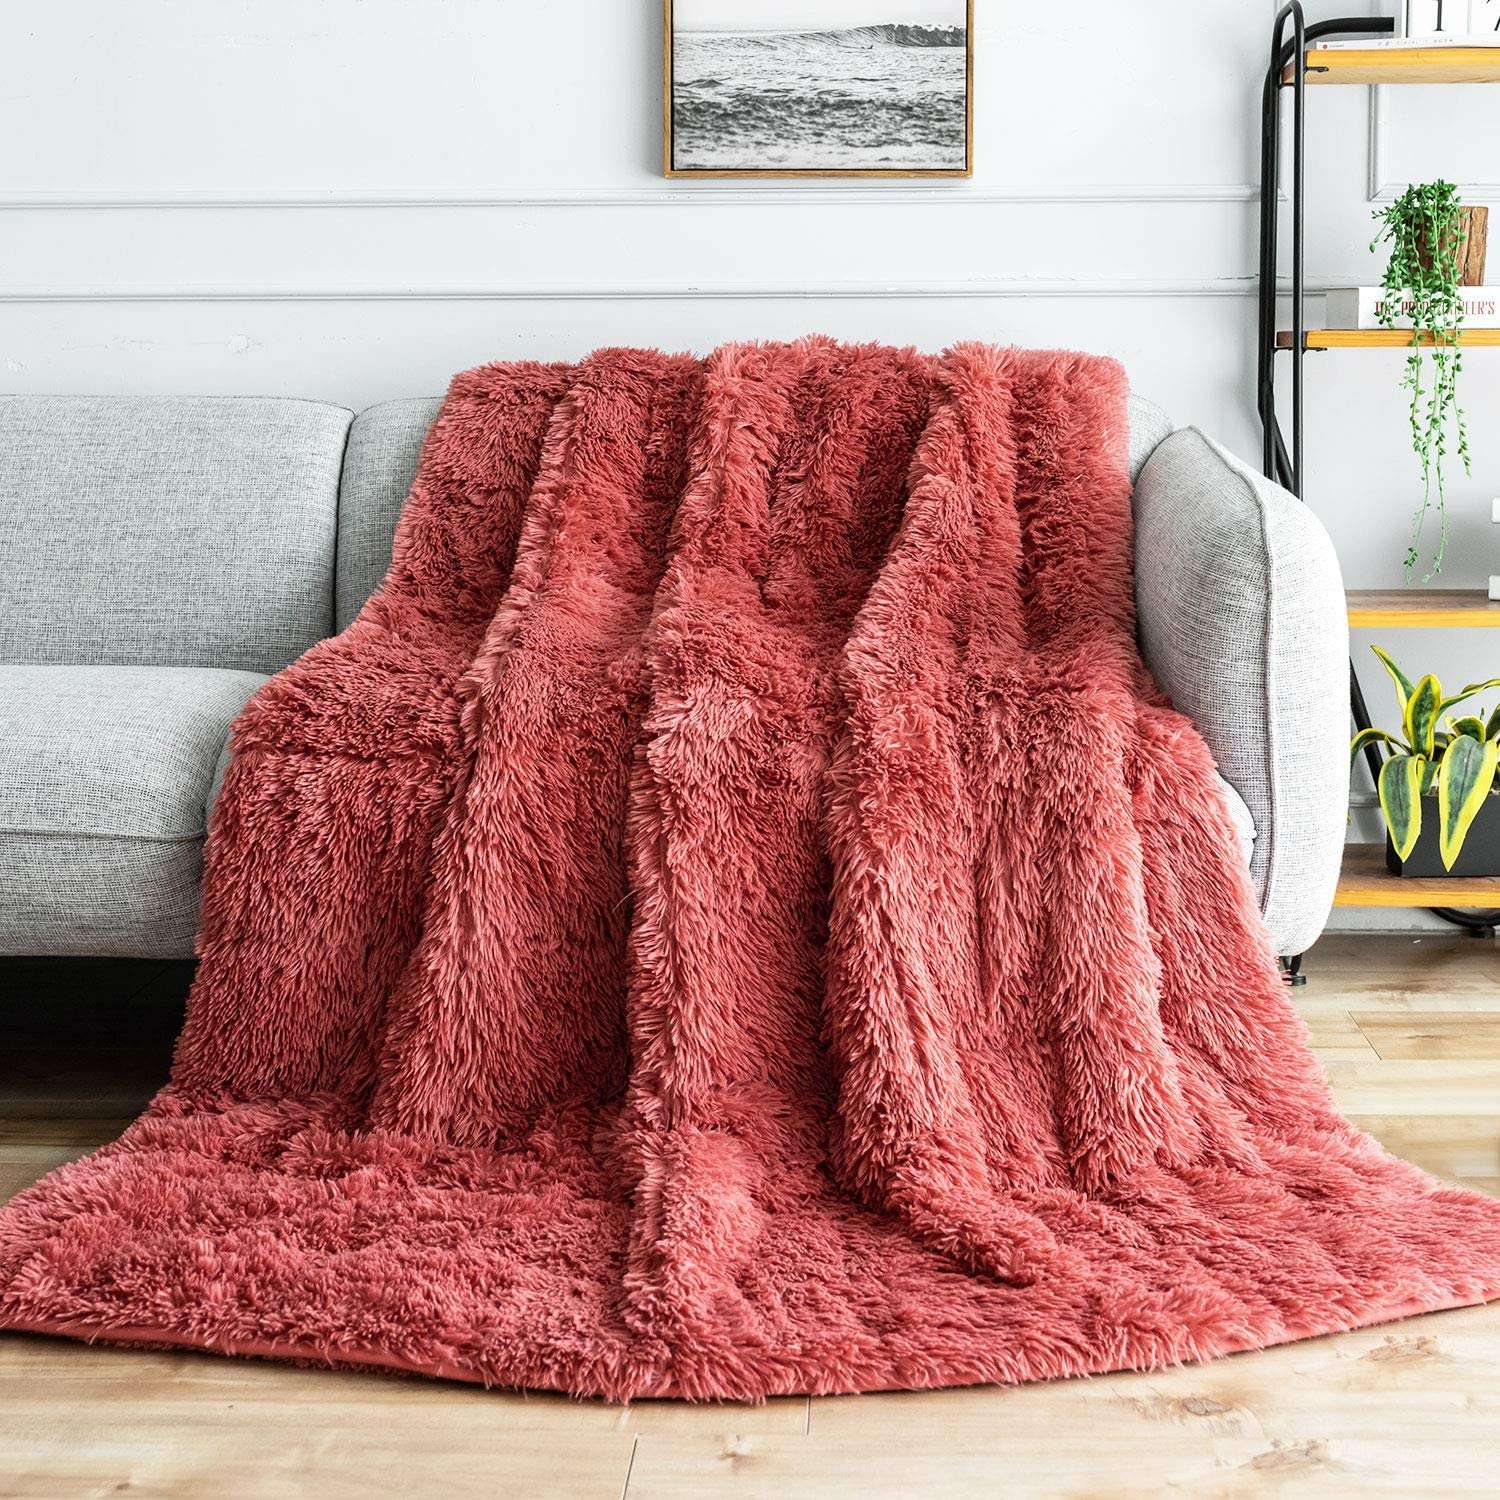 BUZIO Faux Fur Weighted Blanket 15lbs, Super Soft Plush